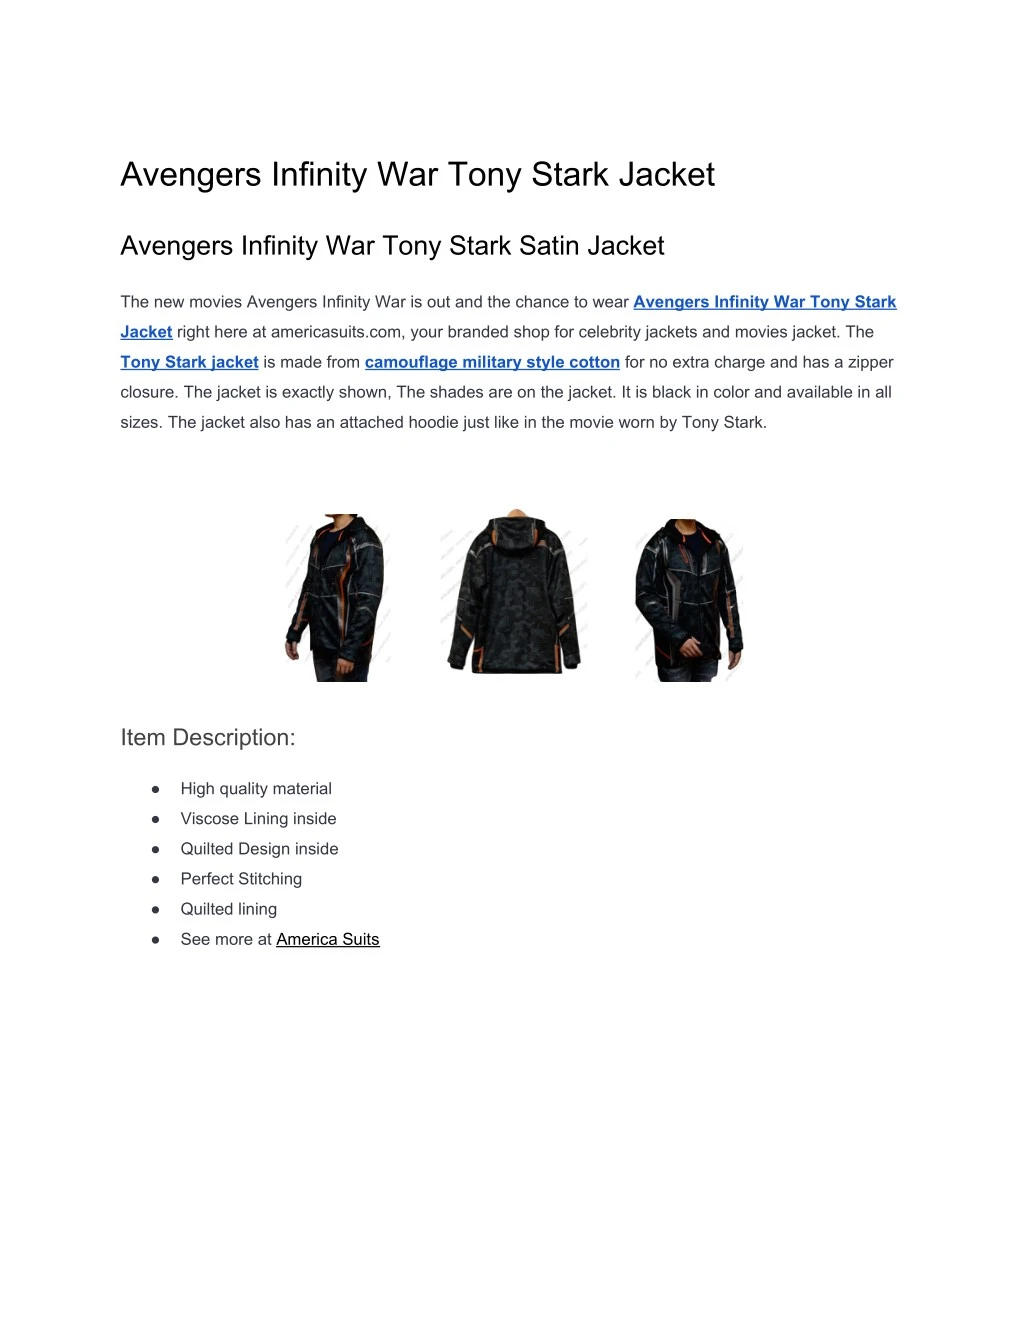 PPT - Avengers Infinity War Tony Stark Jacket PowerPoint Presentation ...